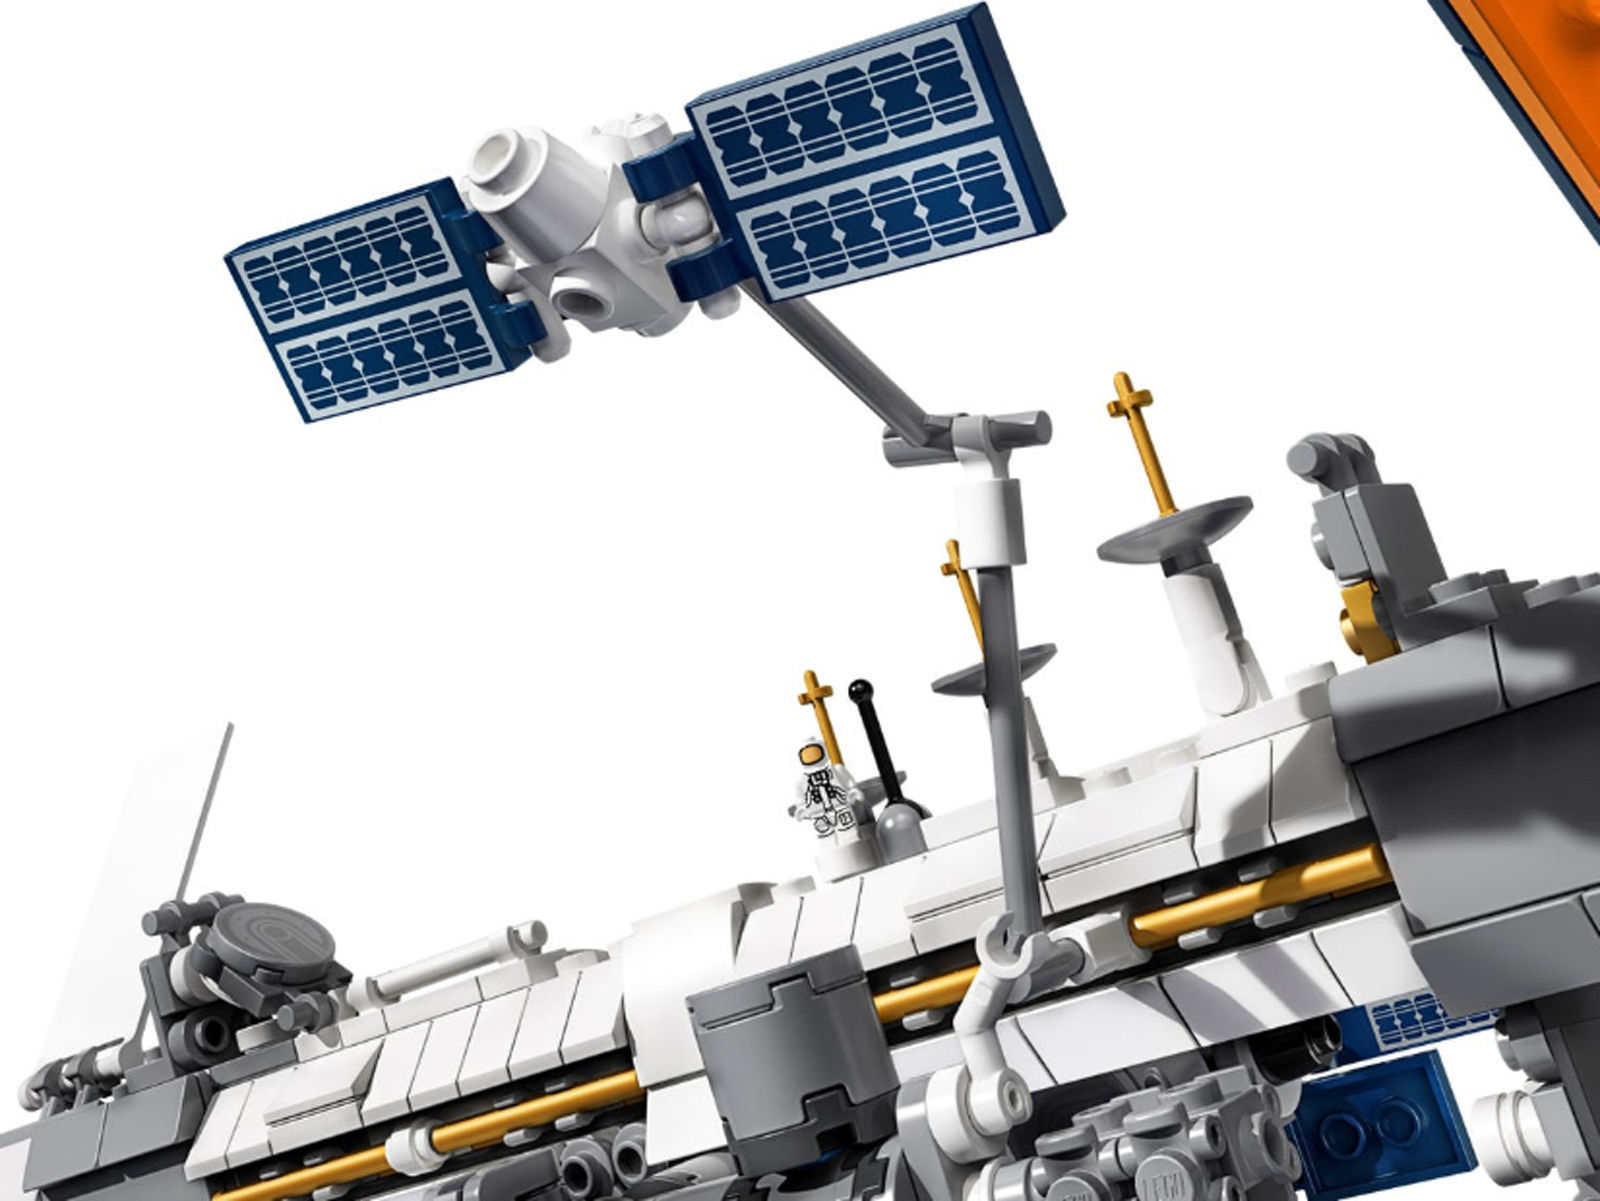 Lego ISS inline